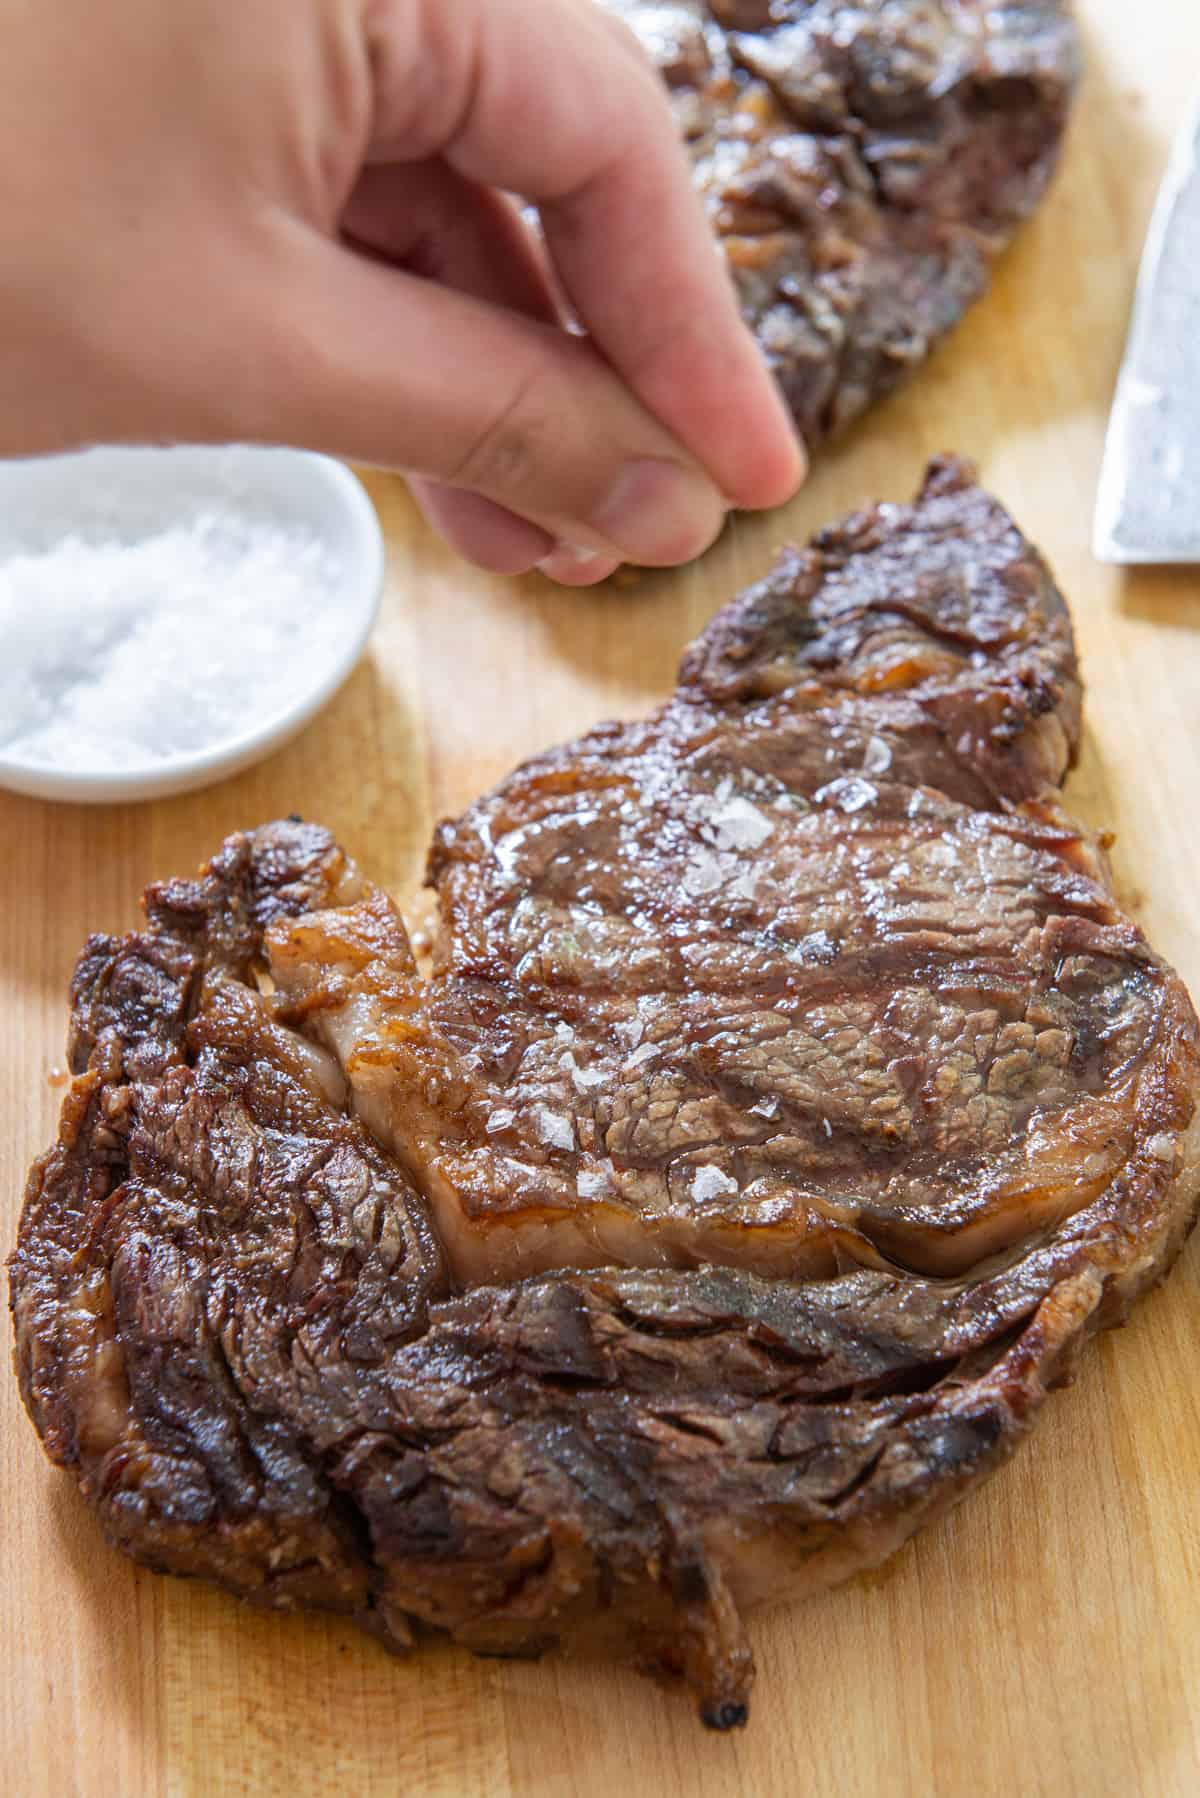 Sprinkling Salt on a Grilled Ribeye Steak